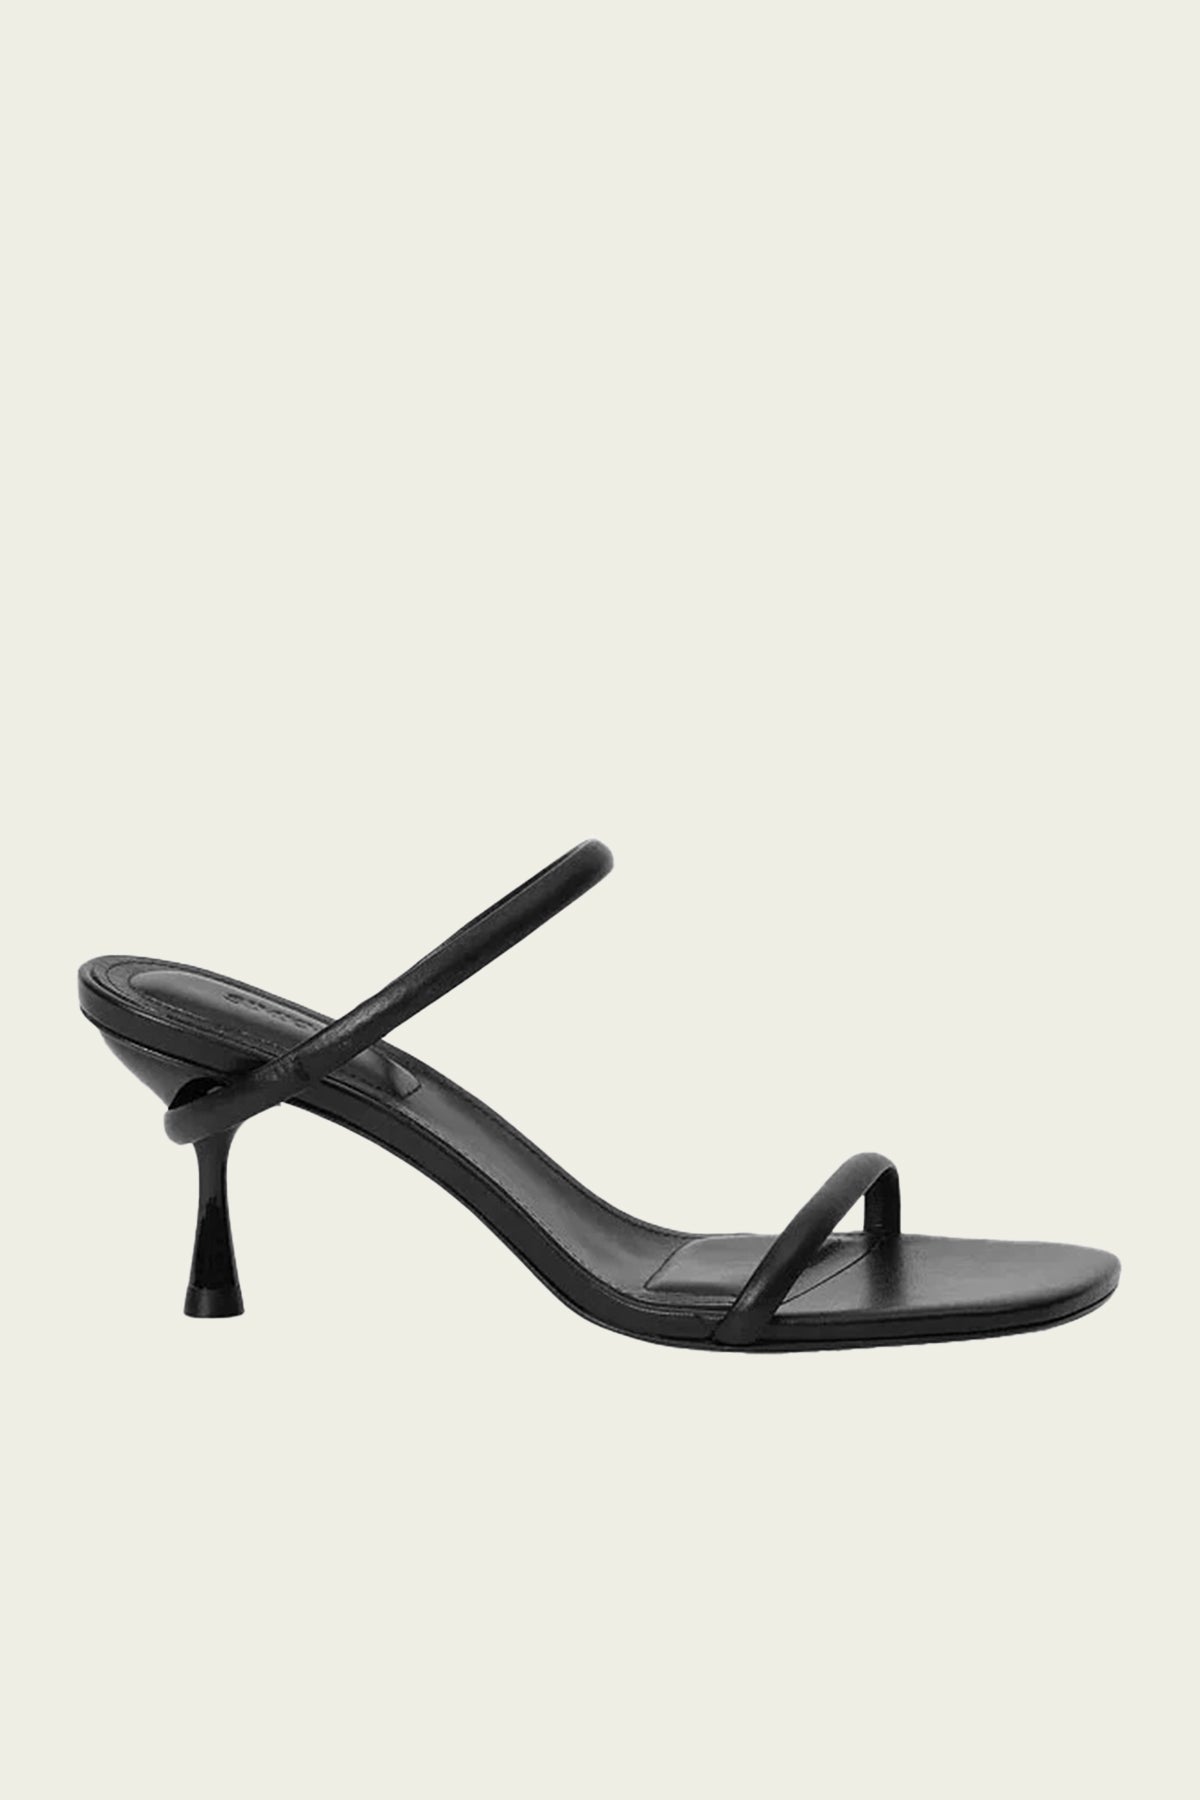 Siren Low Sandal in Black - shop-olivia.com